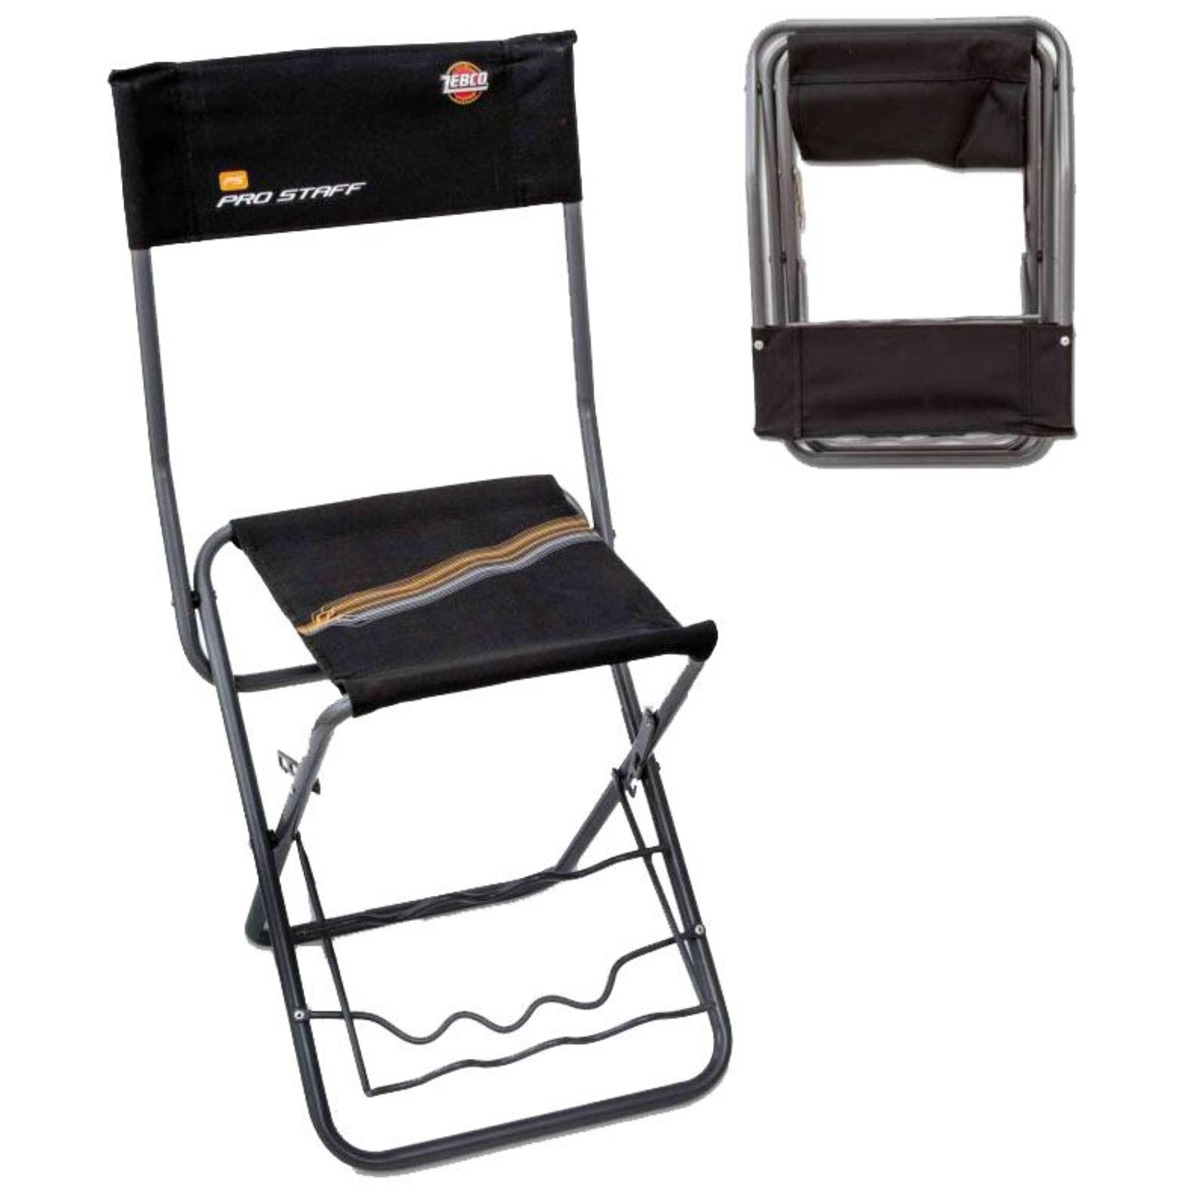 Zebco Pro Staff Rh Chair - 26x32x73 cm